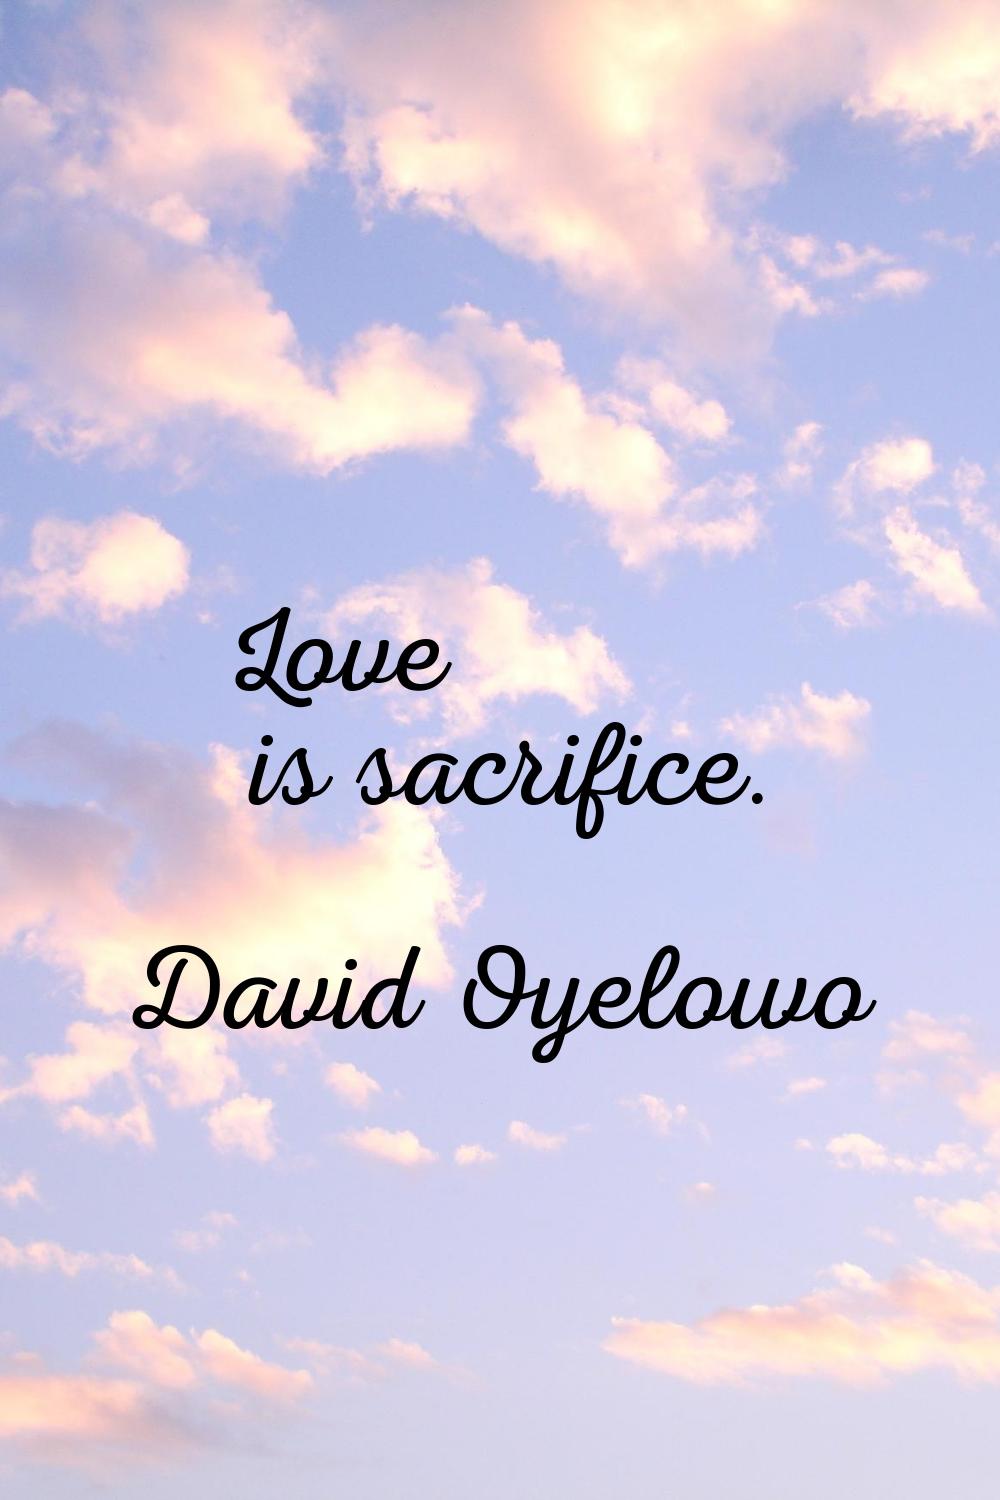 Love is sacrifice.